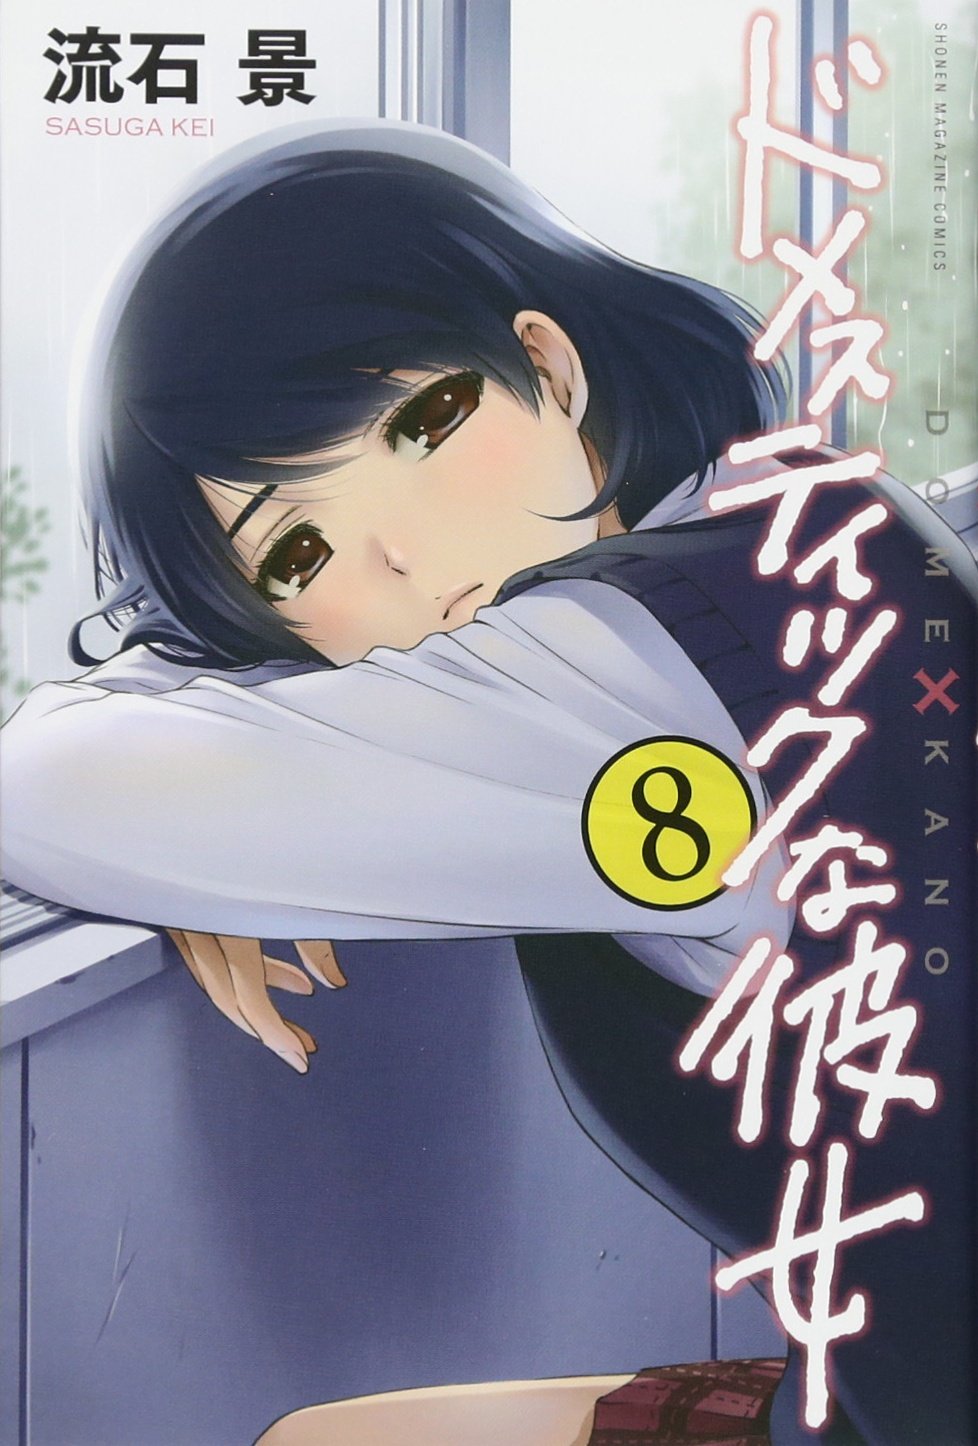 Domestic Girlfriend Volume 22 (Domestic na Kanojo) - Manga Store 